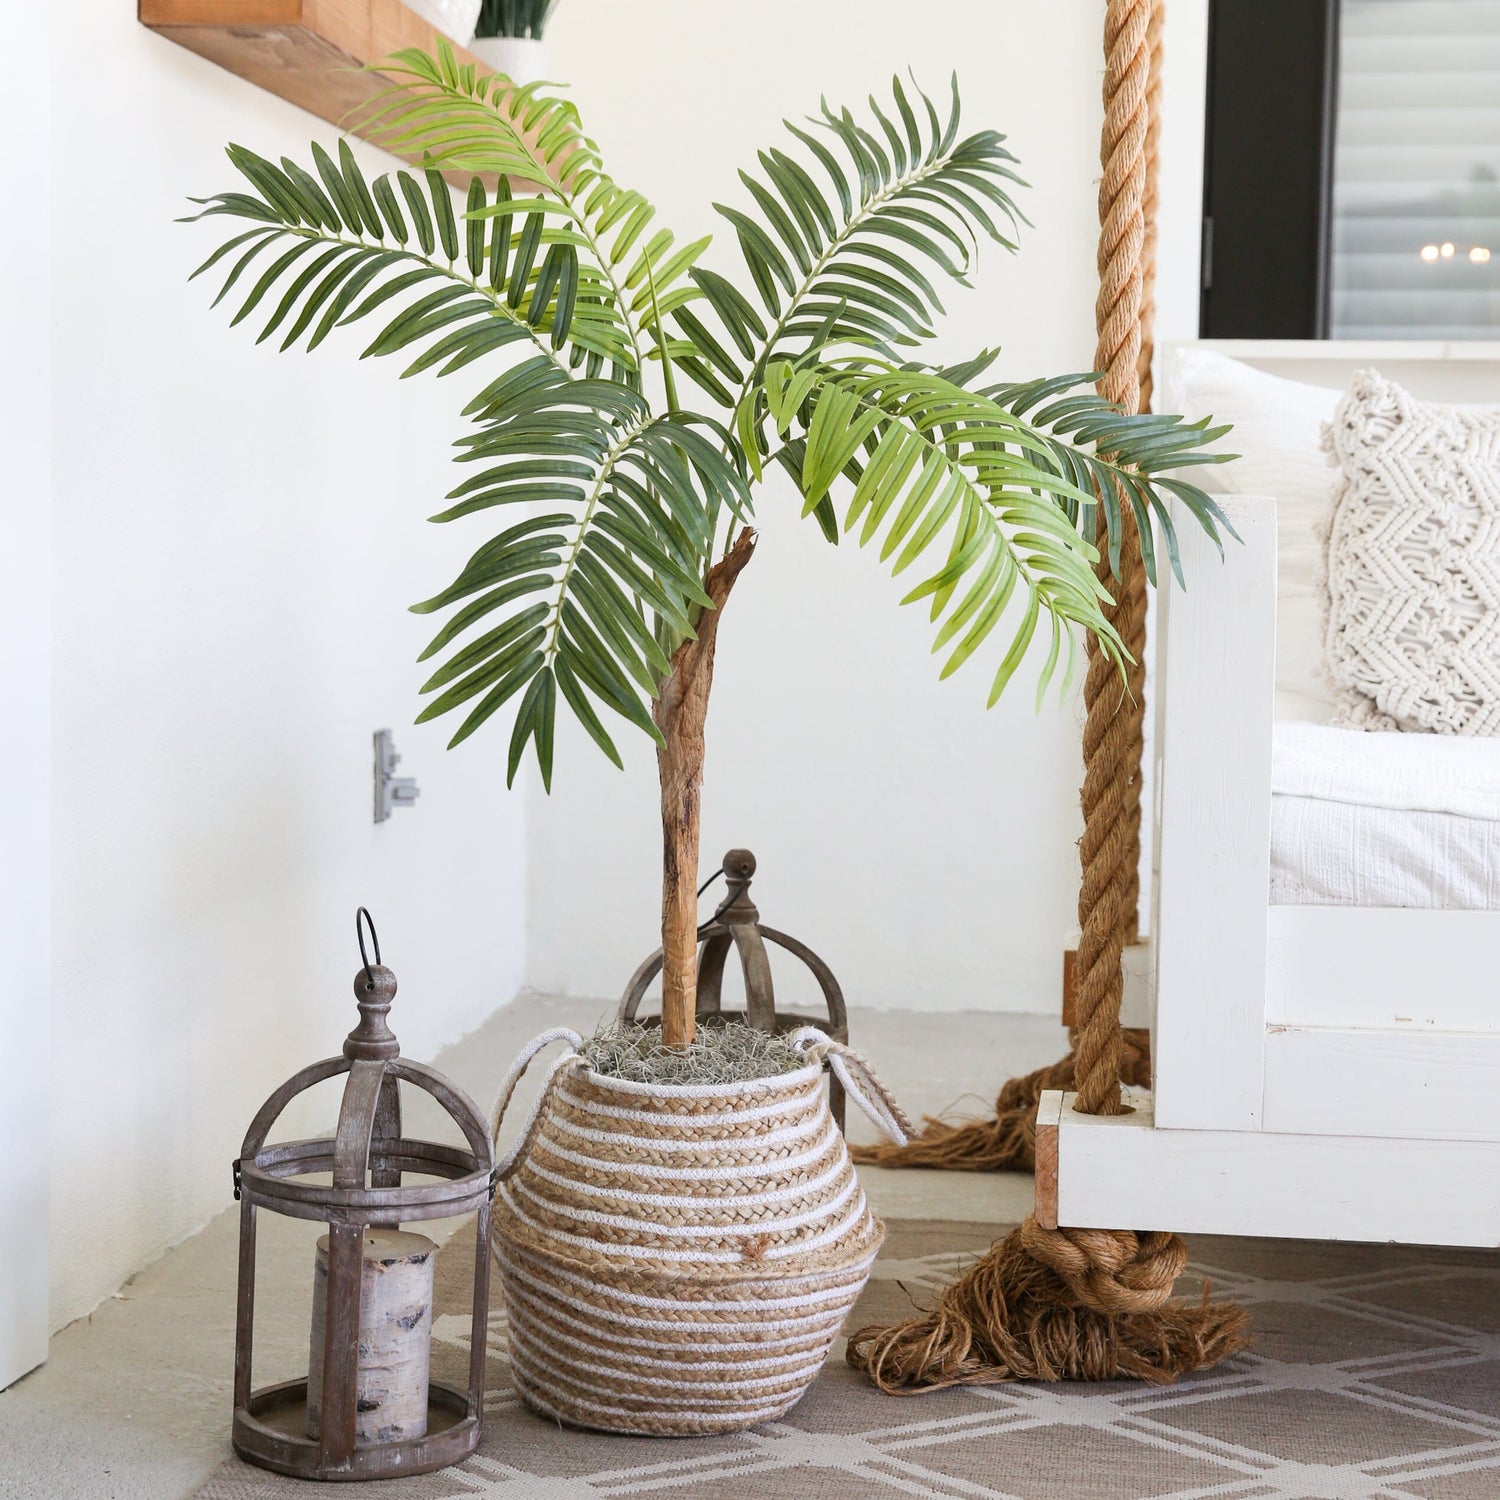 4’ Artificial Areca Palm Tree with Decorative Planter